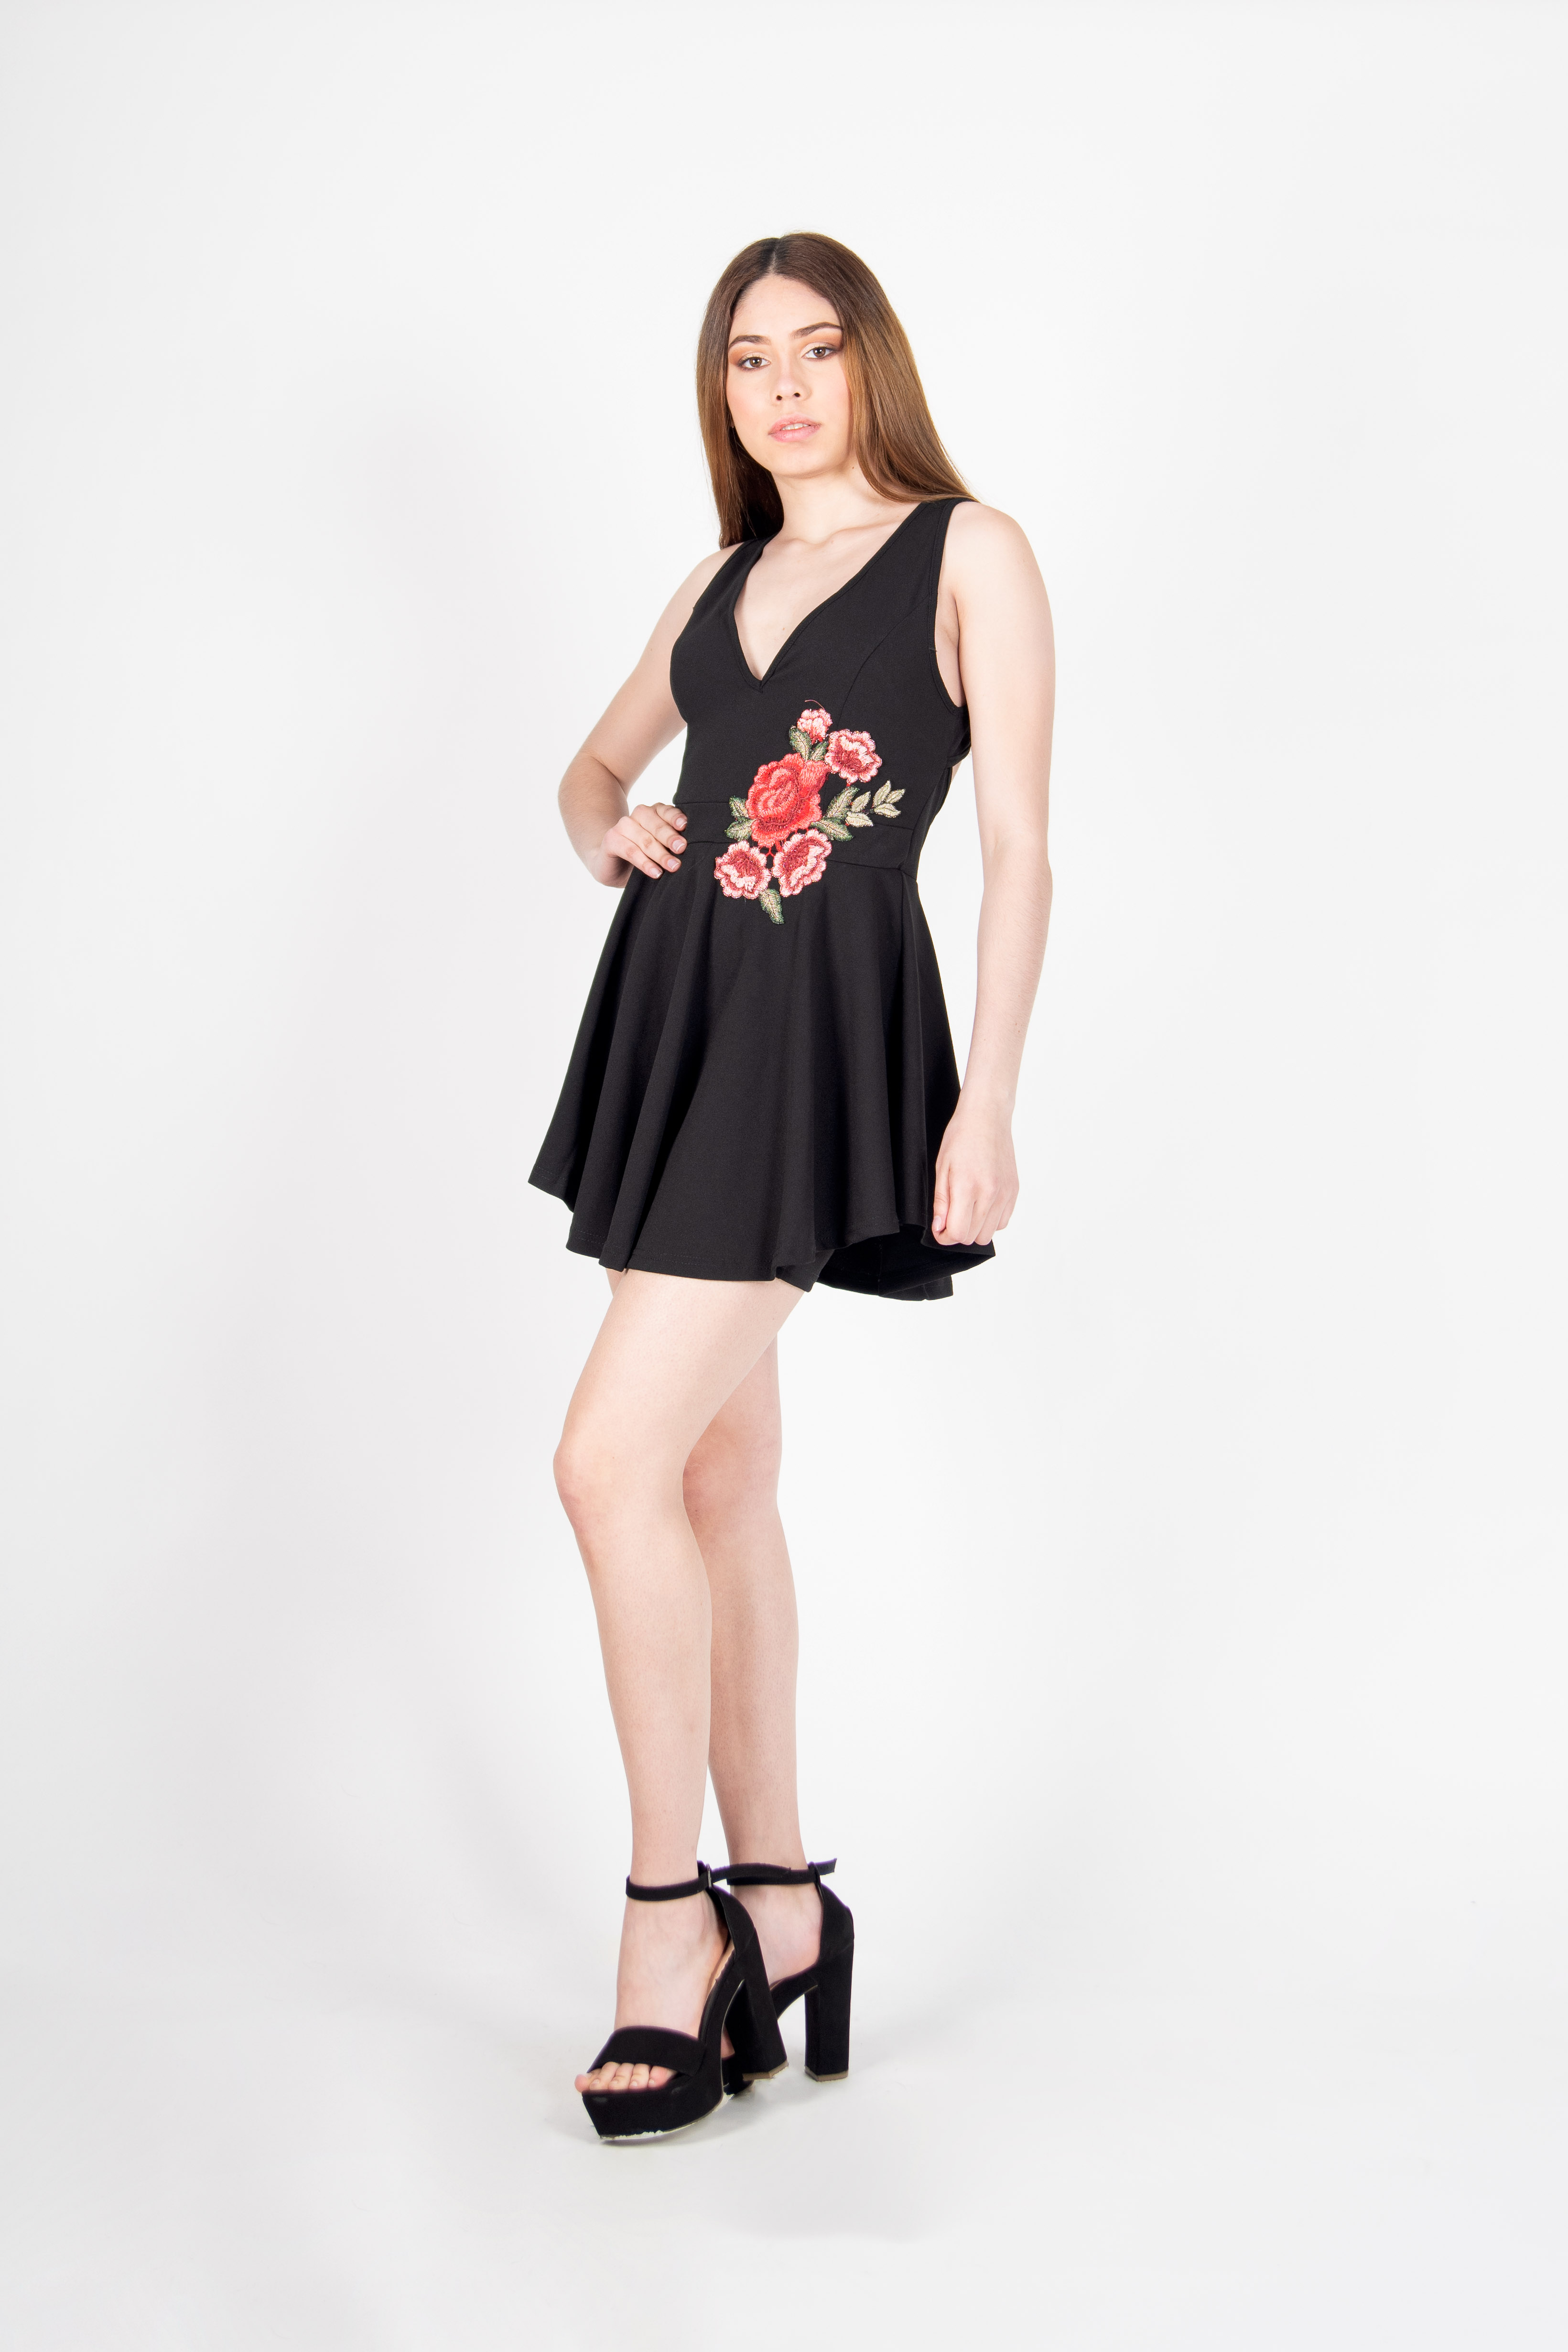 Little Black Dress with a Flower